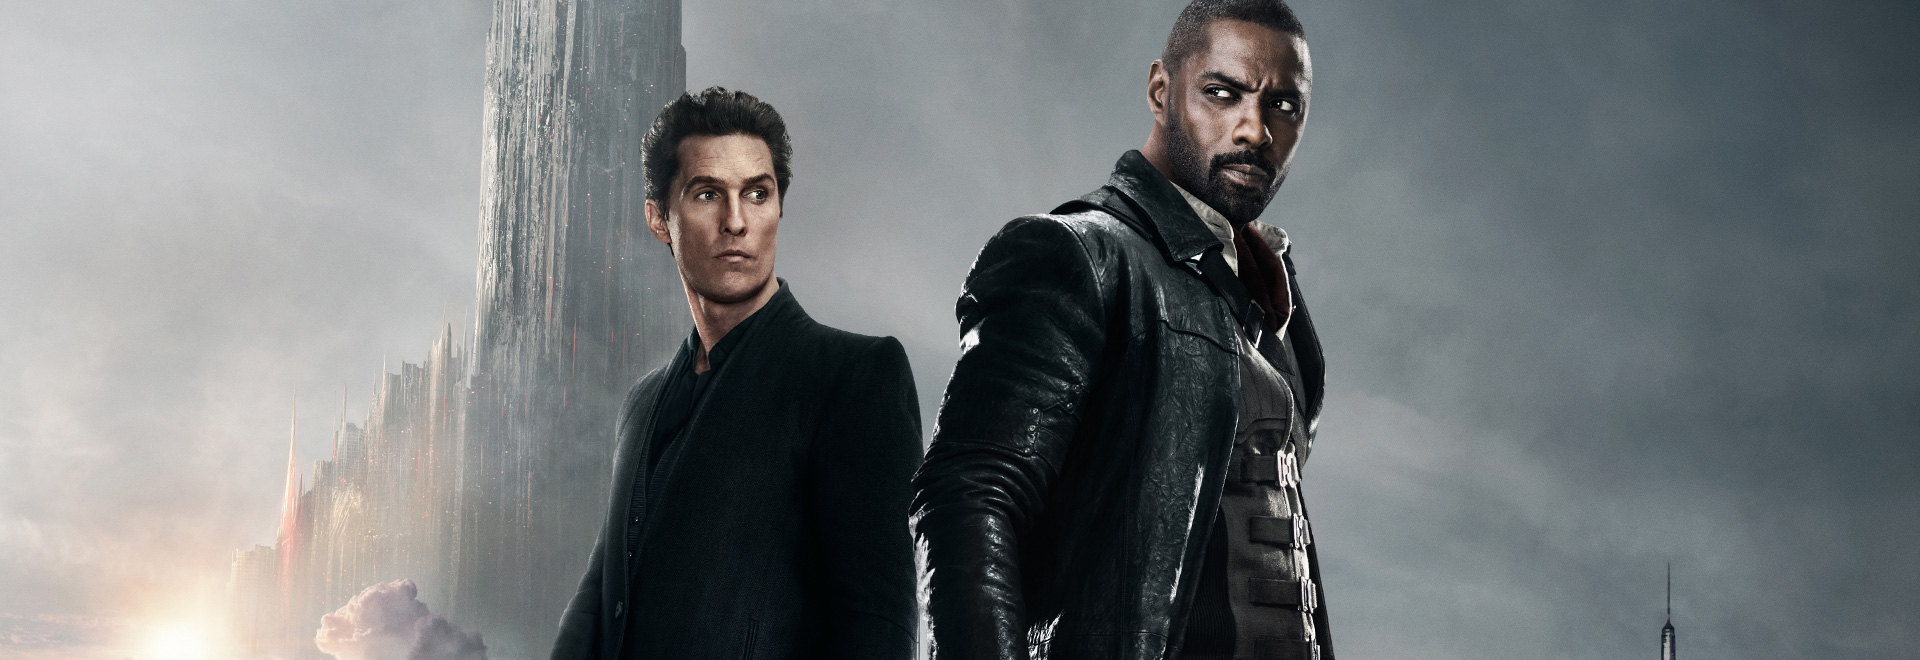 The Dark Tower - Idris Elba and Matthew McConaughey's thrilling fantasy